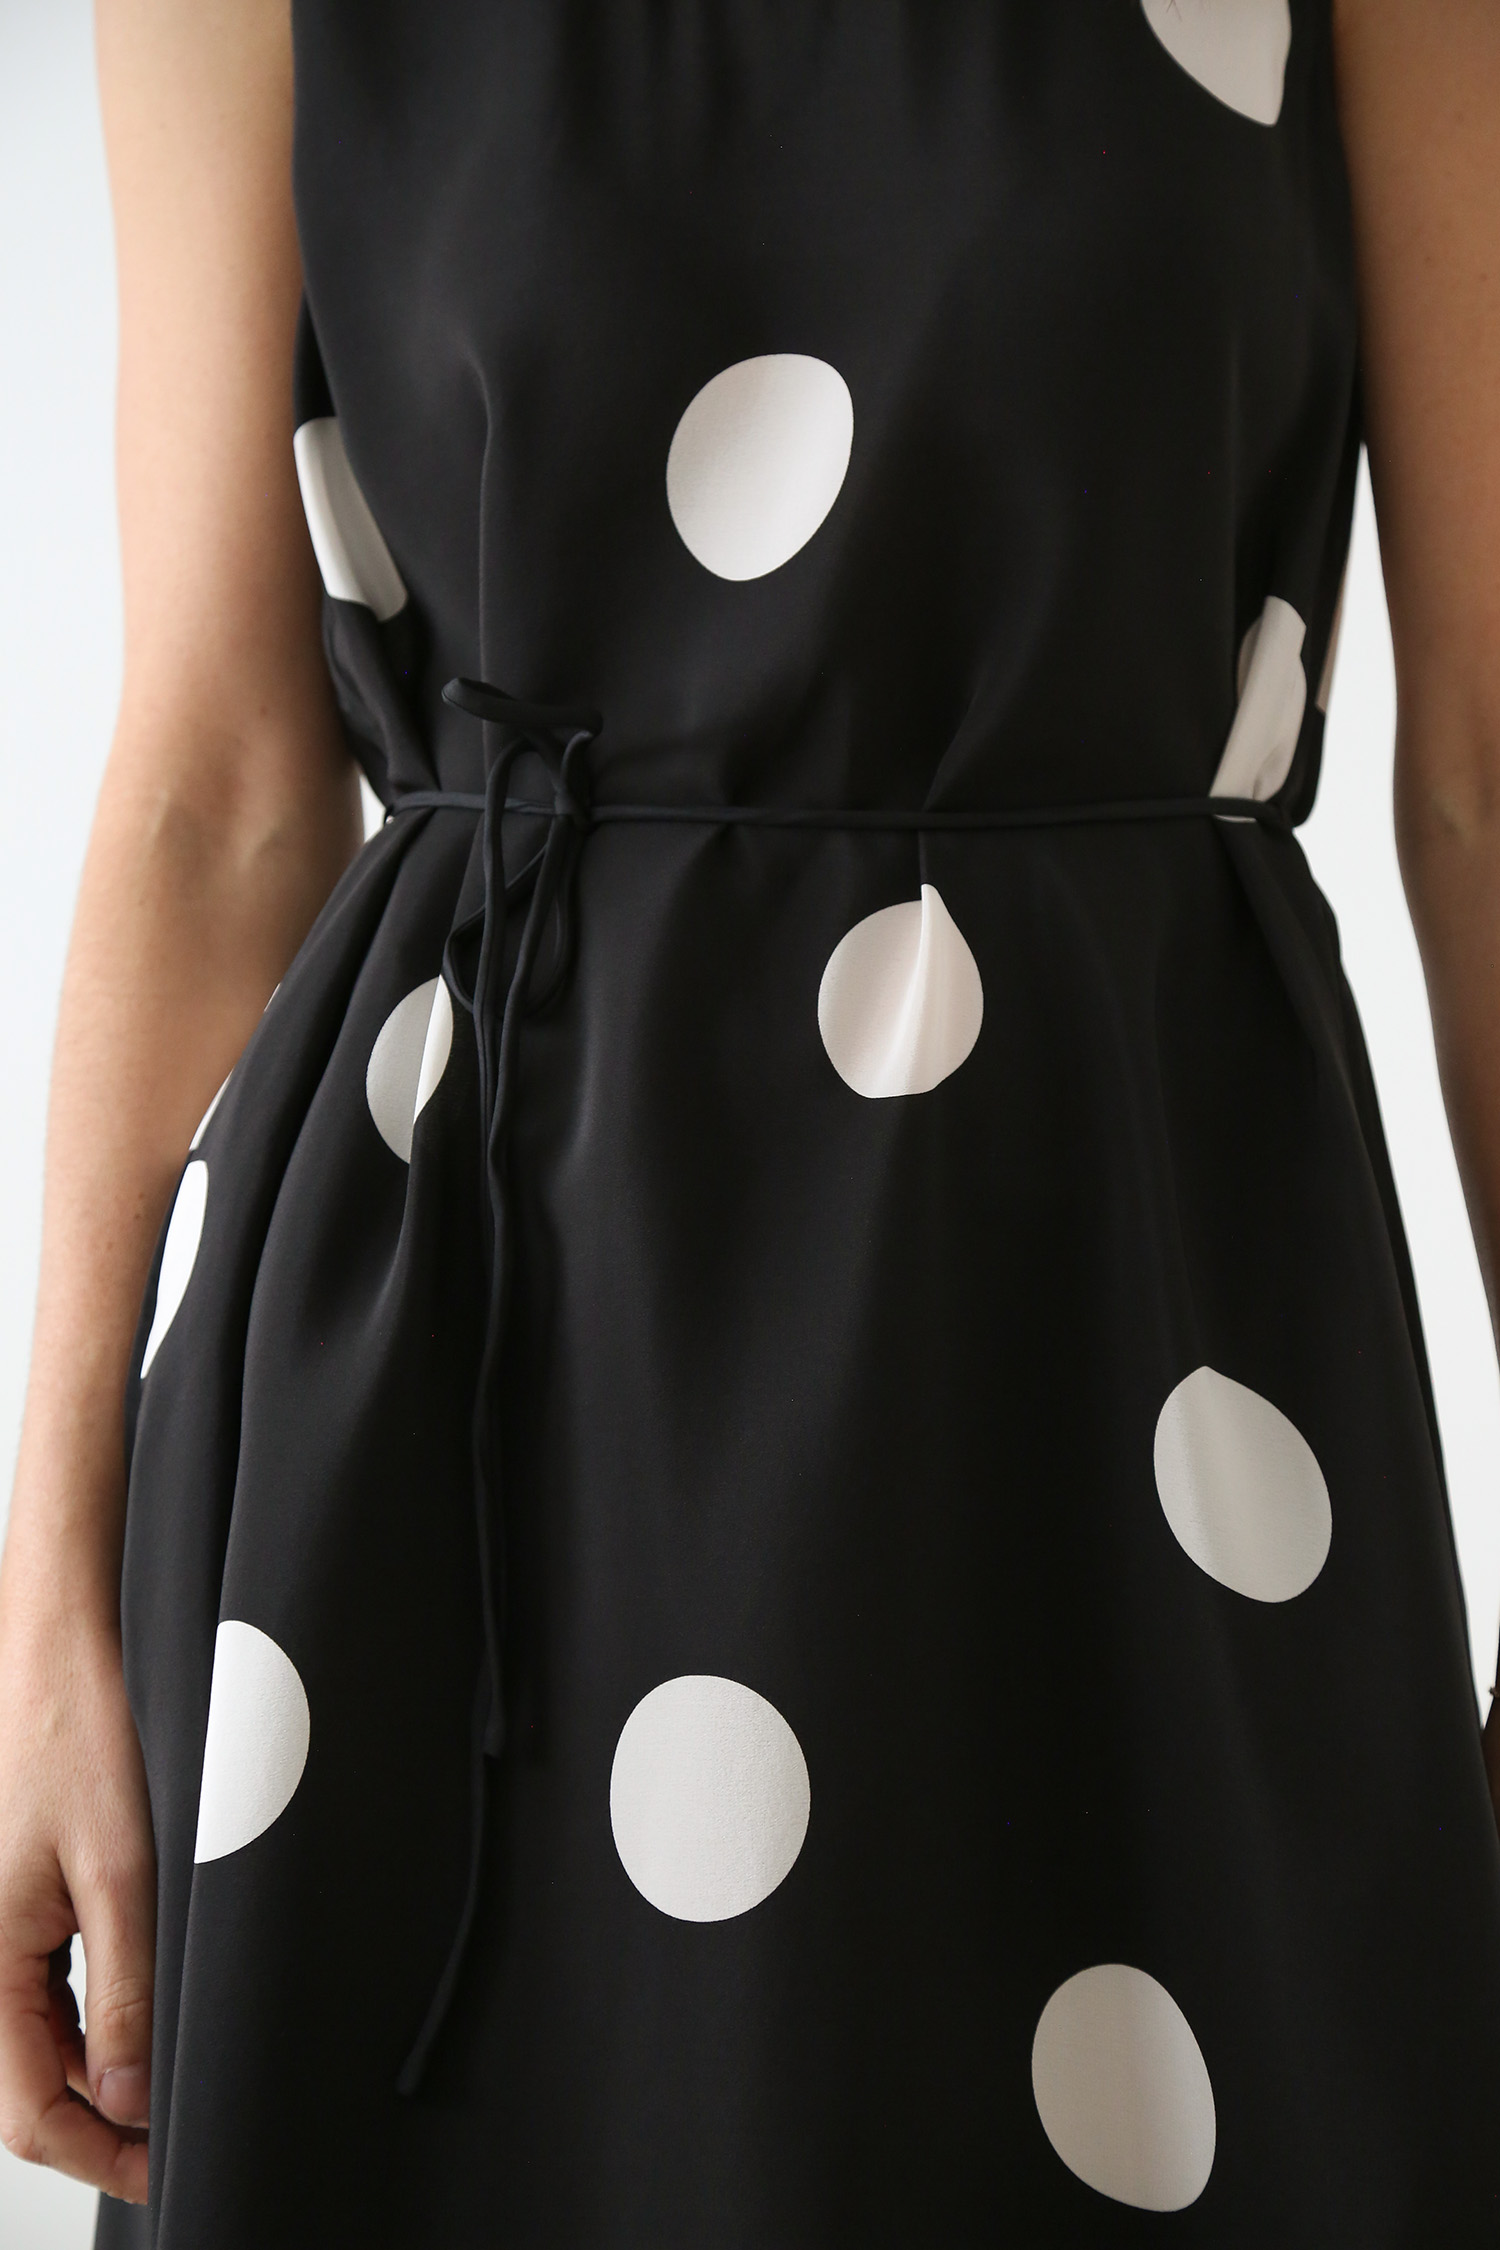 Polka dot dress details